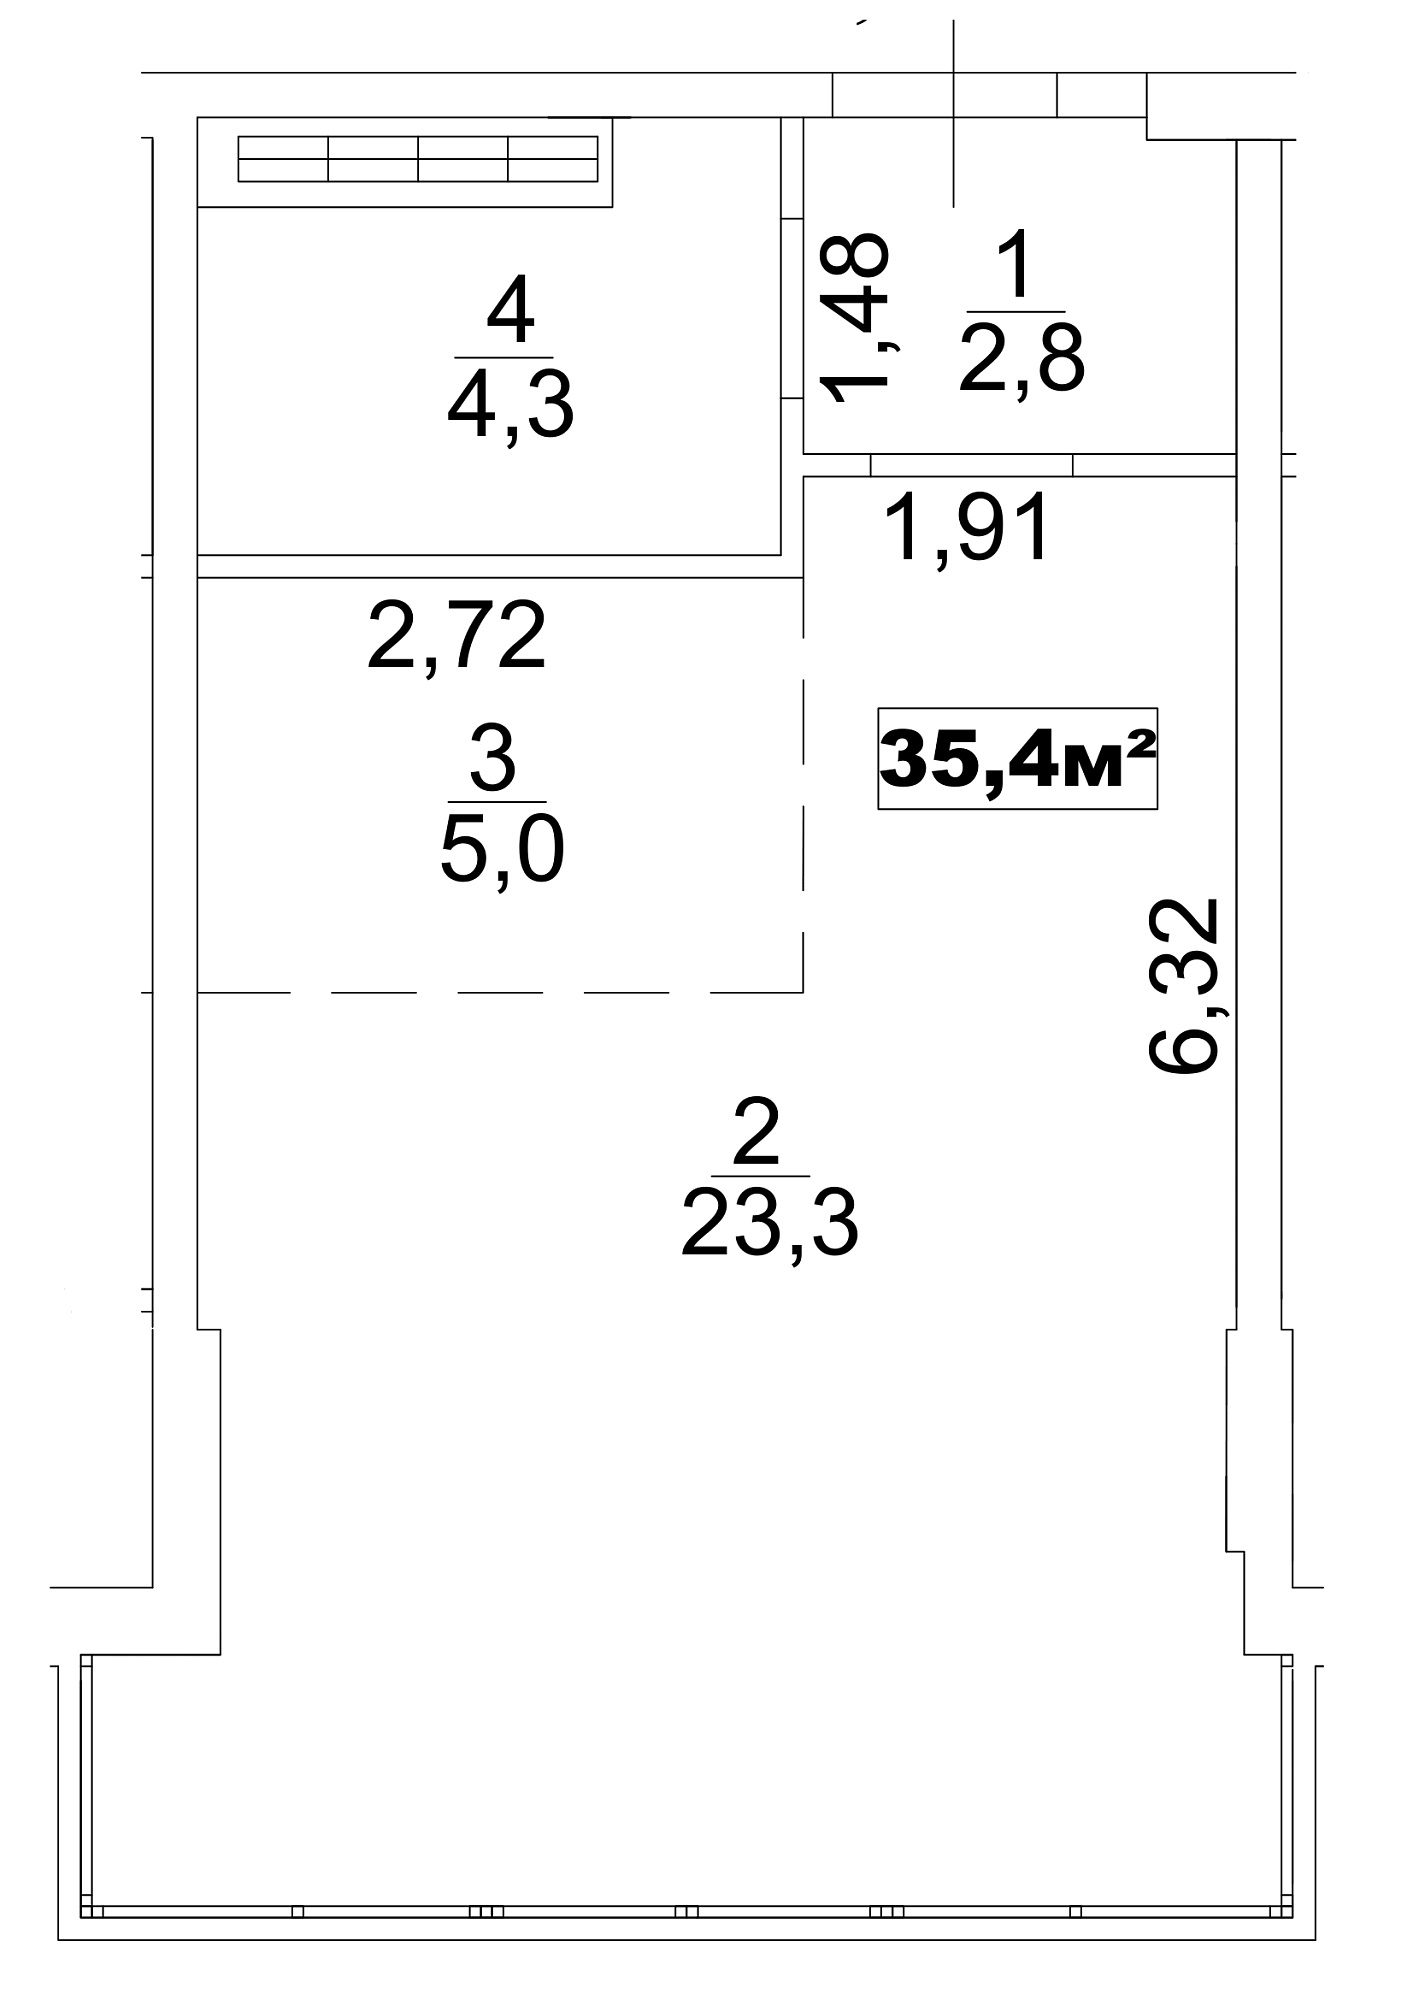 Planning Smart flats area 35.4m2, AB-13-10/0079б.